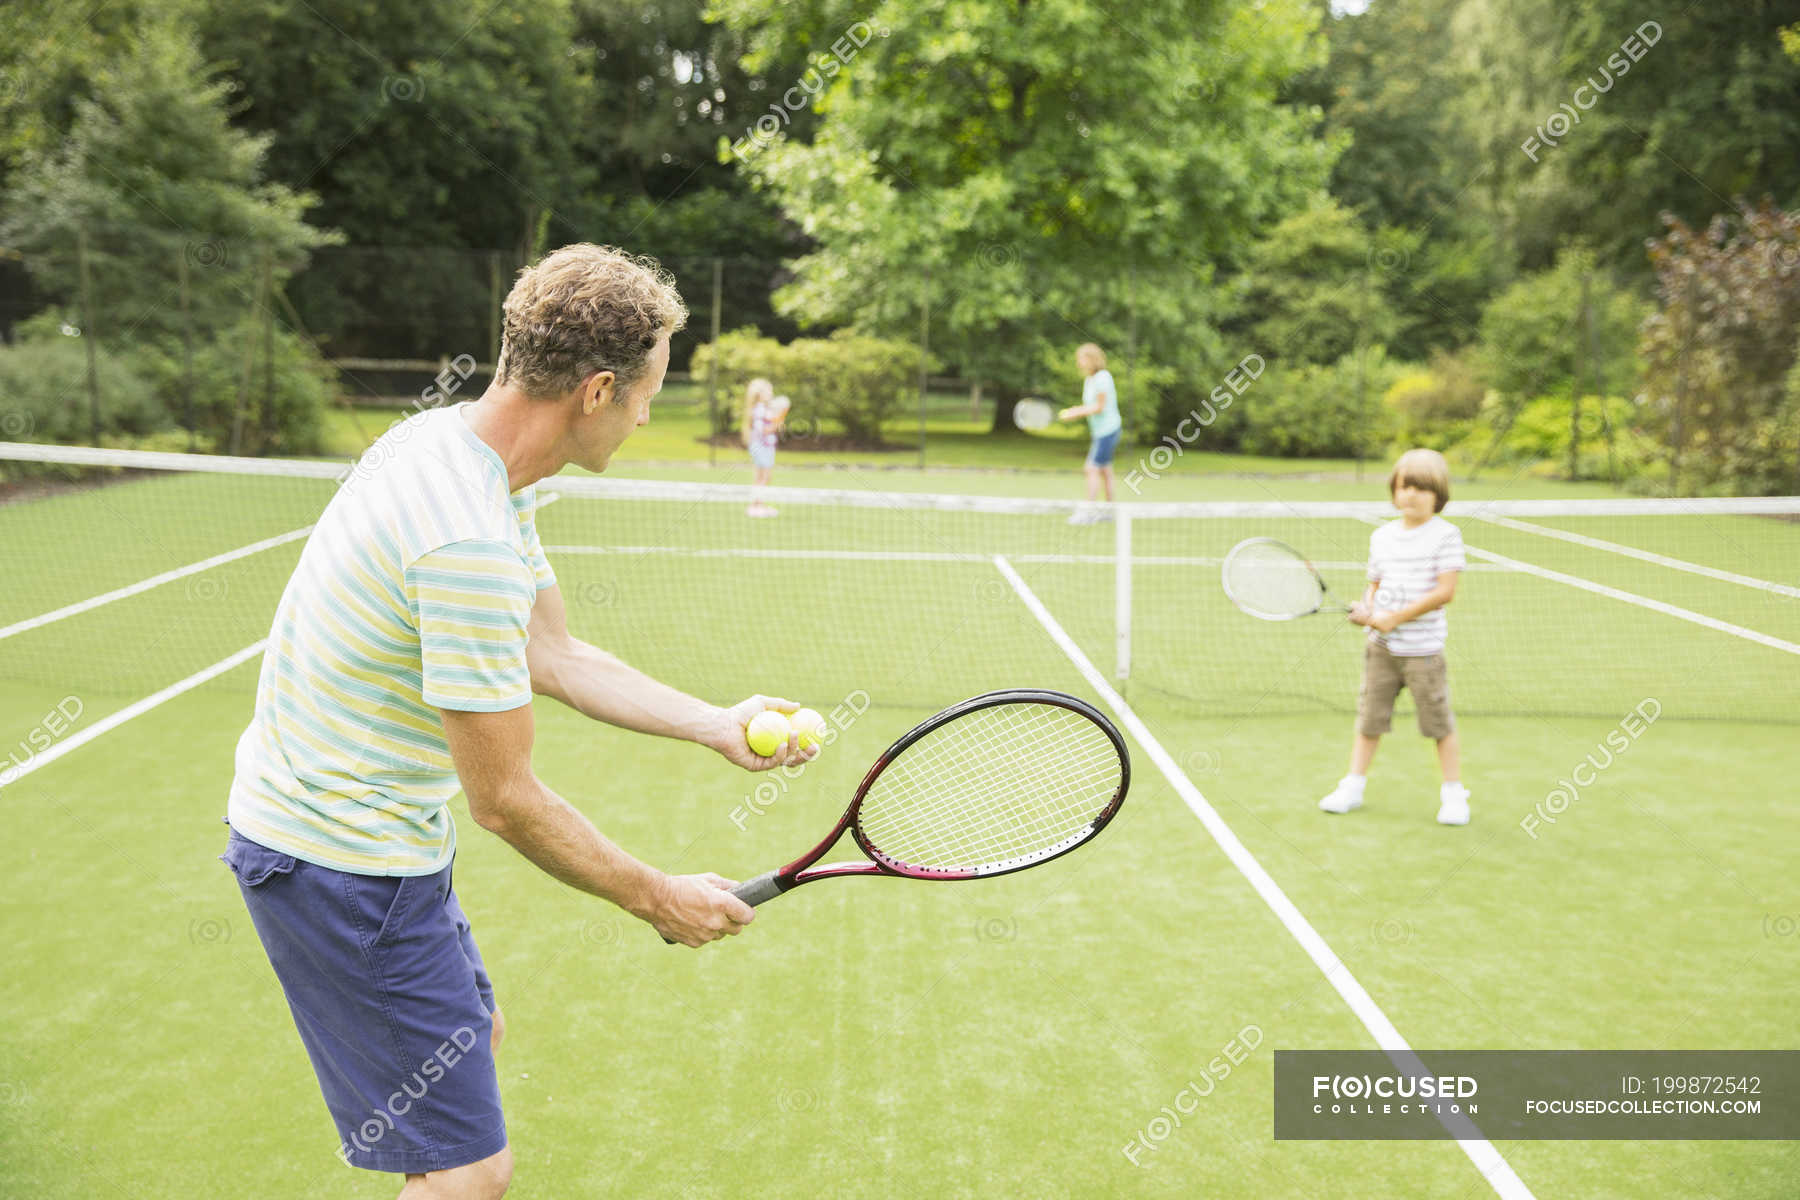 You can play tennis your. Теннис дети. Теннис семья. Дети играют в теннис. Семья играет в теннис.